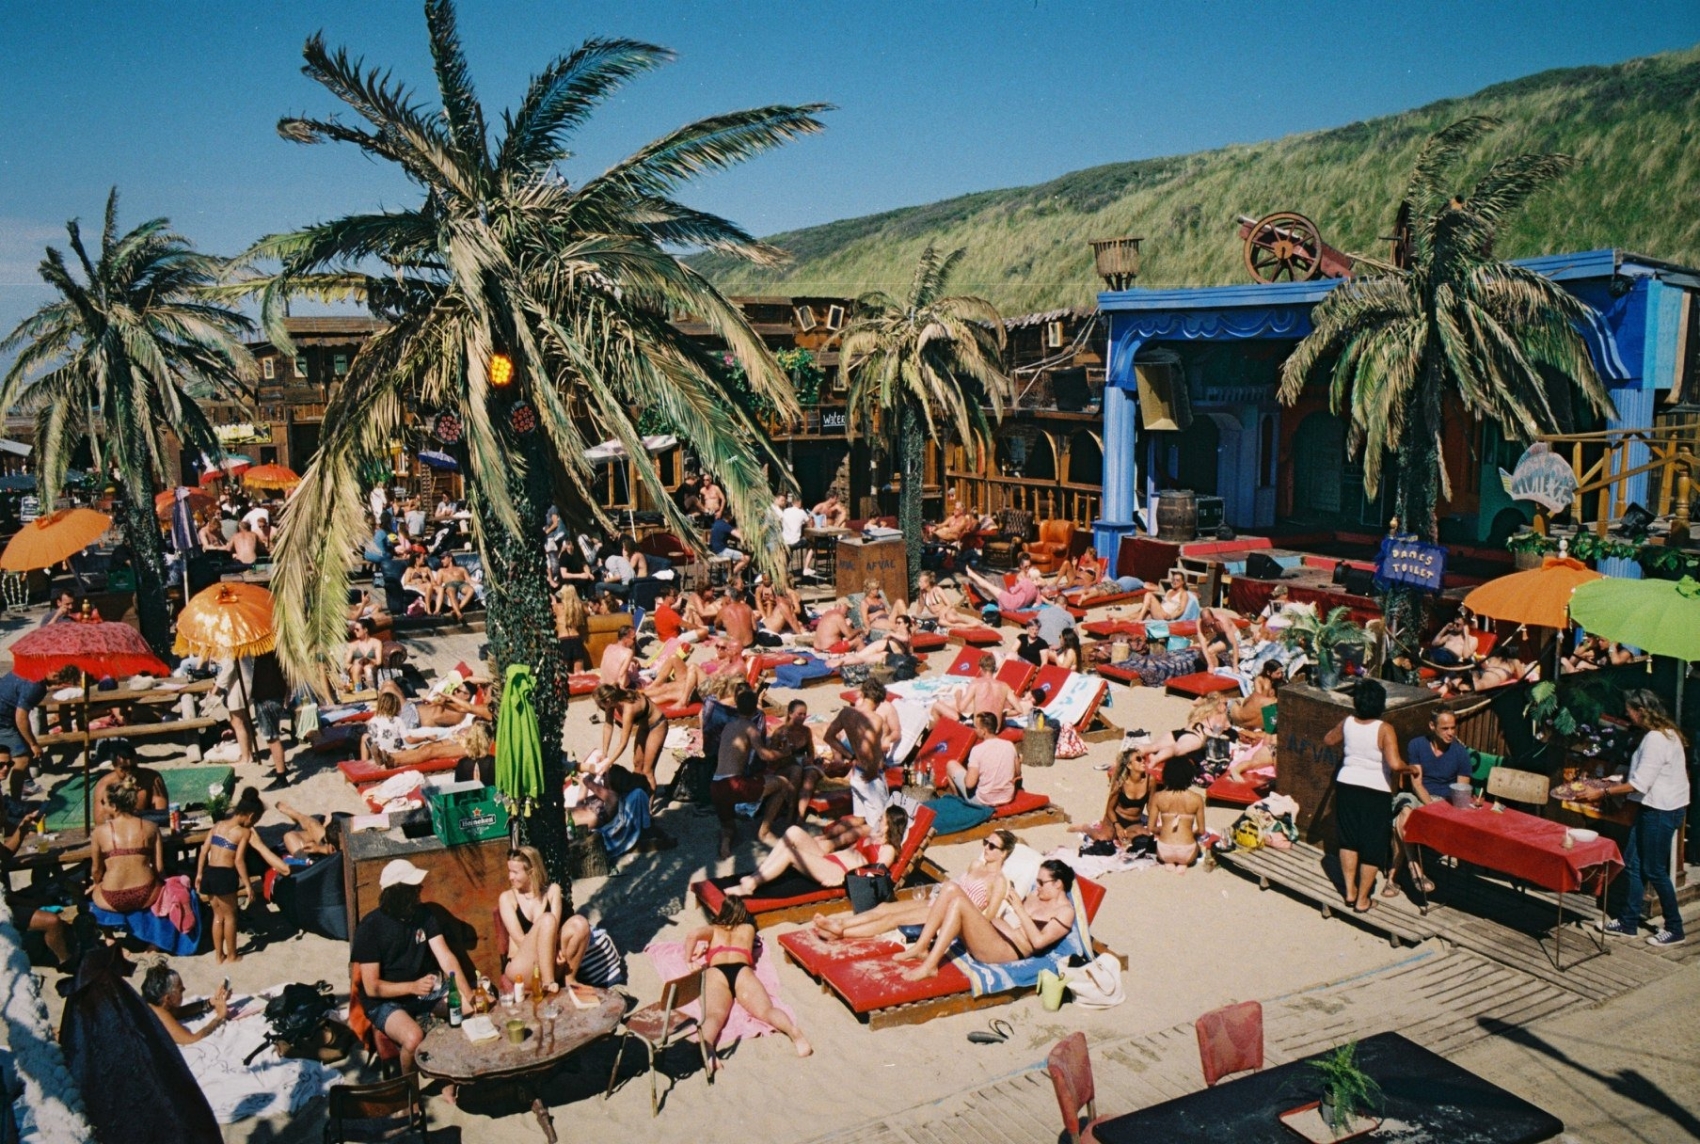 The nicest beach bars in Bloemendaal and Zandvoort